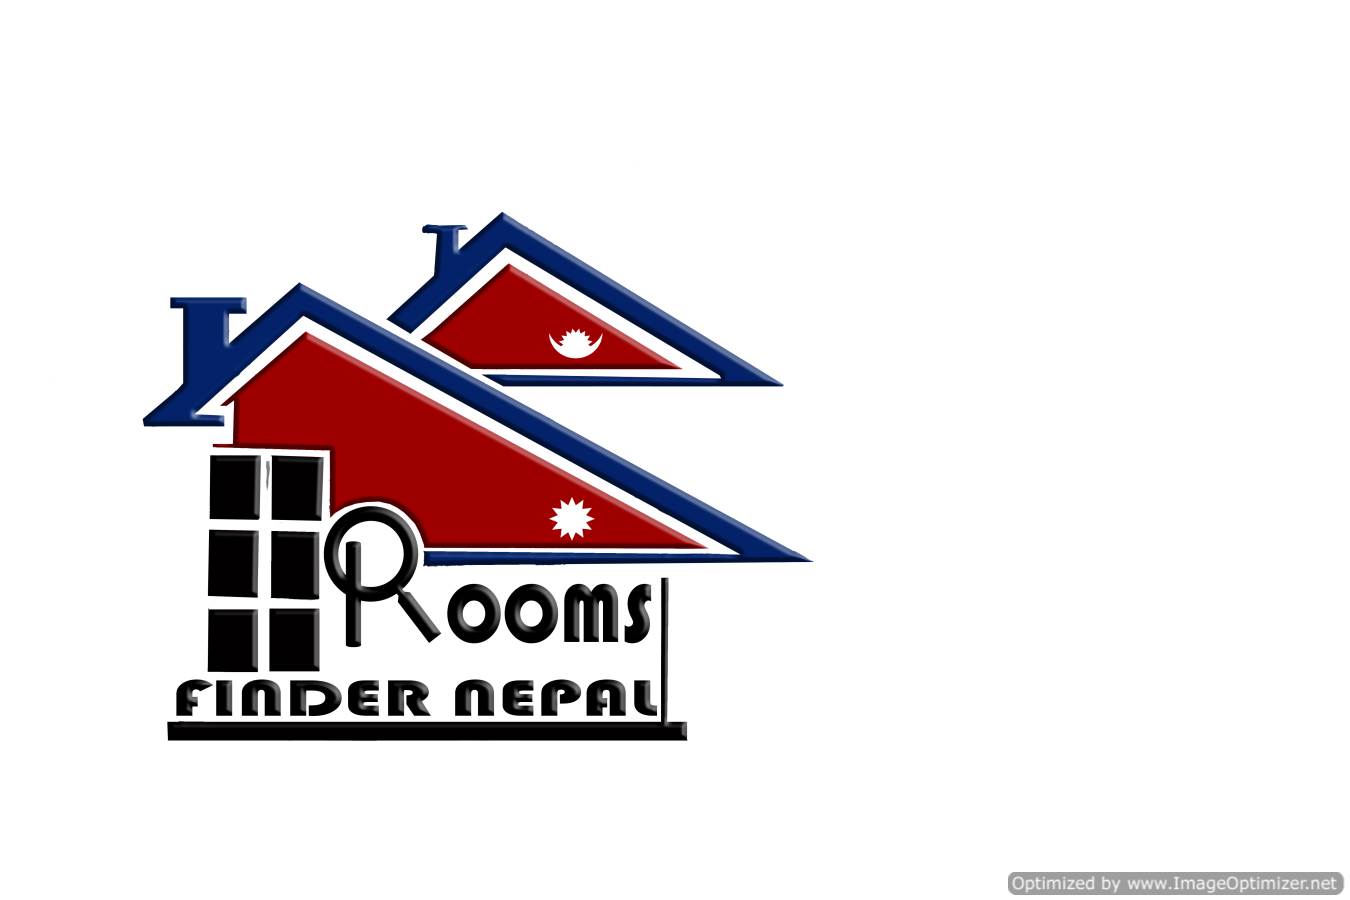 Rooms Finder Nepal